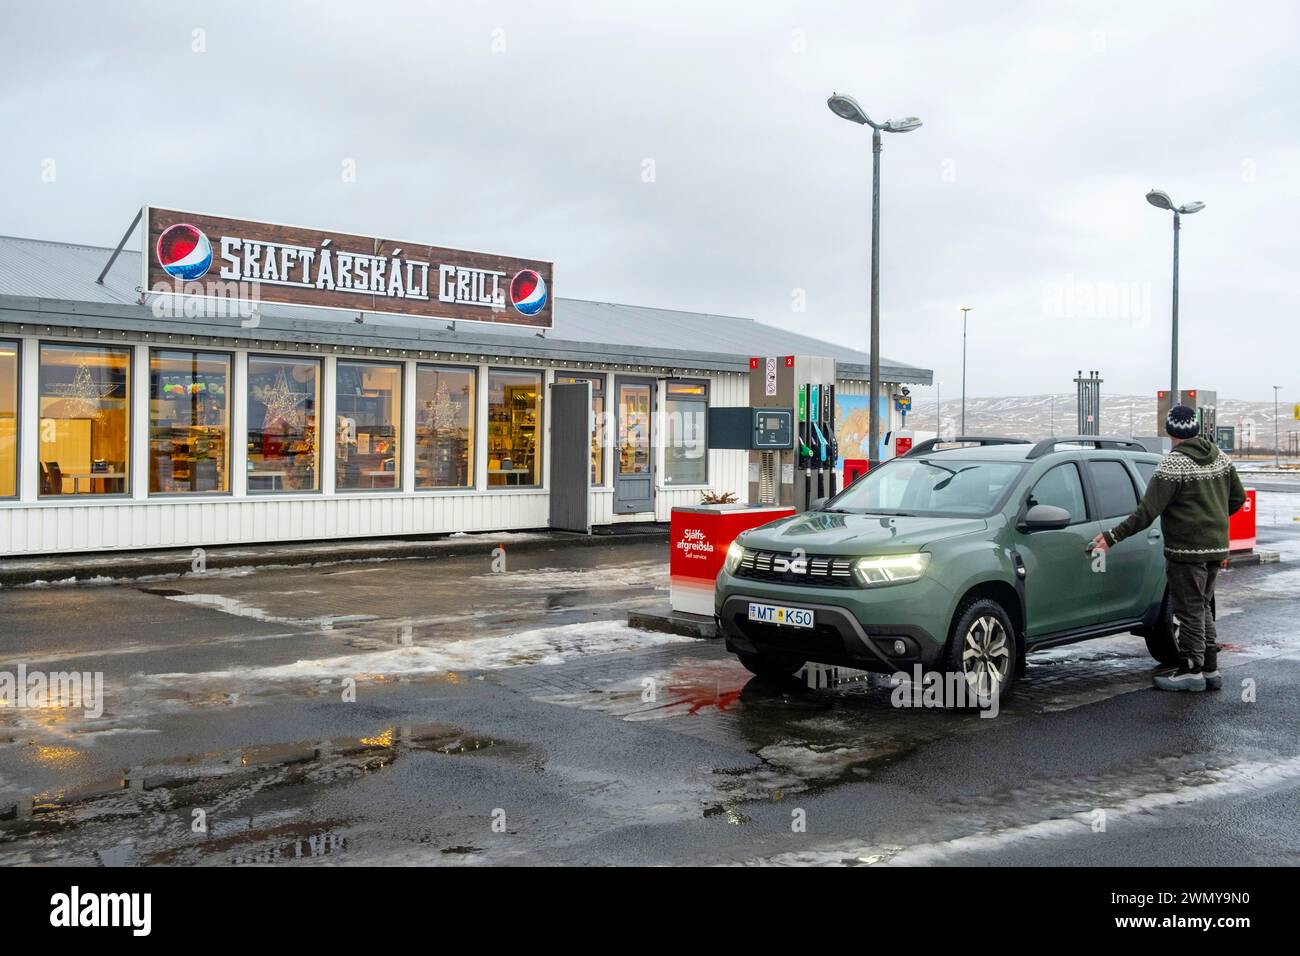 Iceland, South Coast, Vik, gas station and Skaftarskali grill cafe Stock Photo